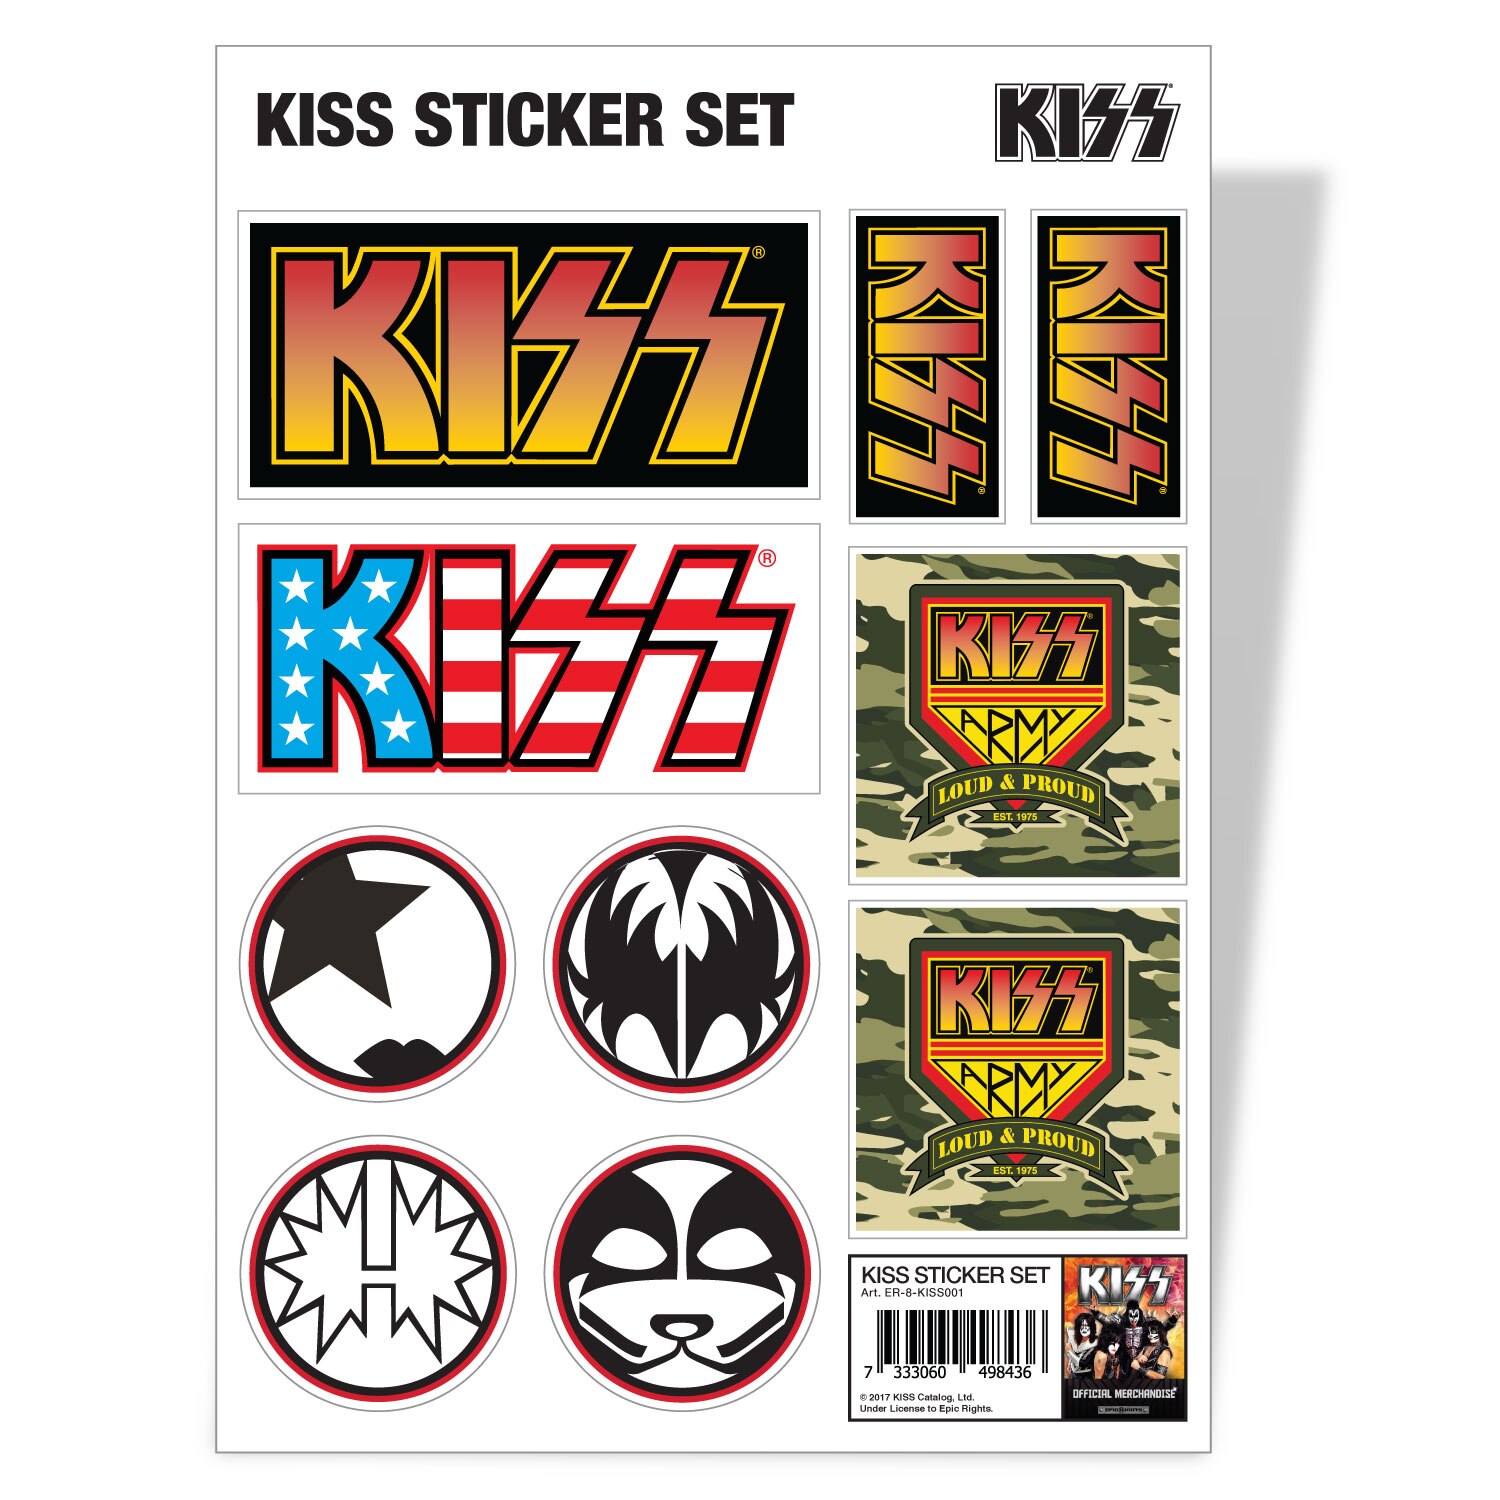 KISS Sticker Set